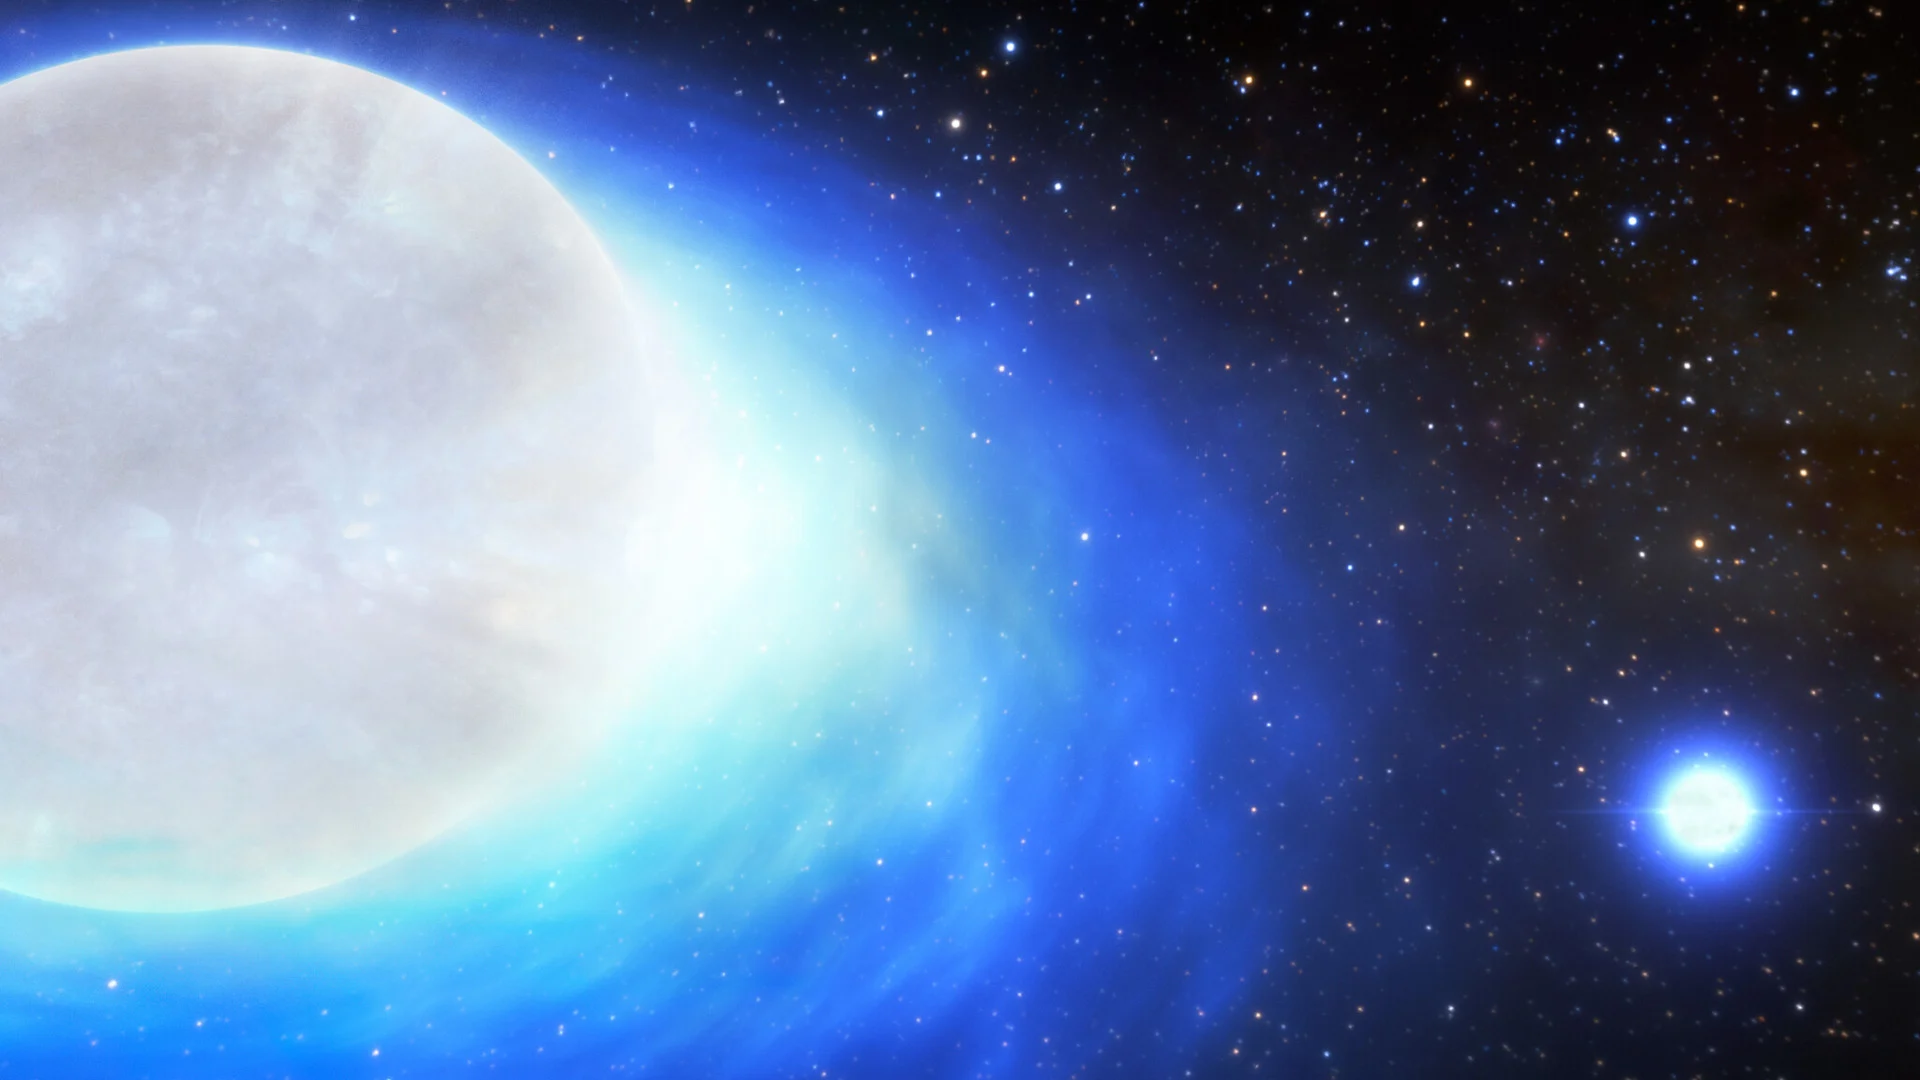 binary star CPD-29 2176 - noirlab2303a